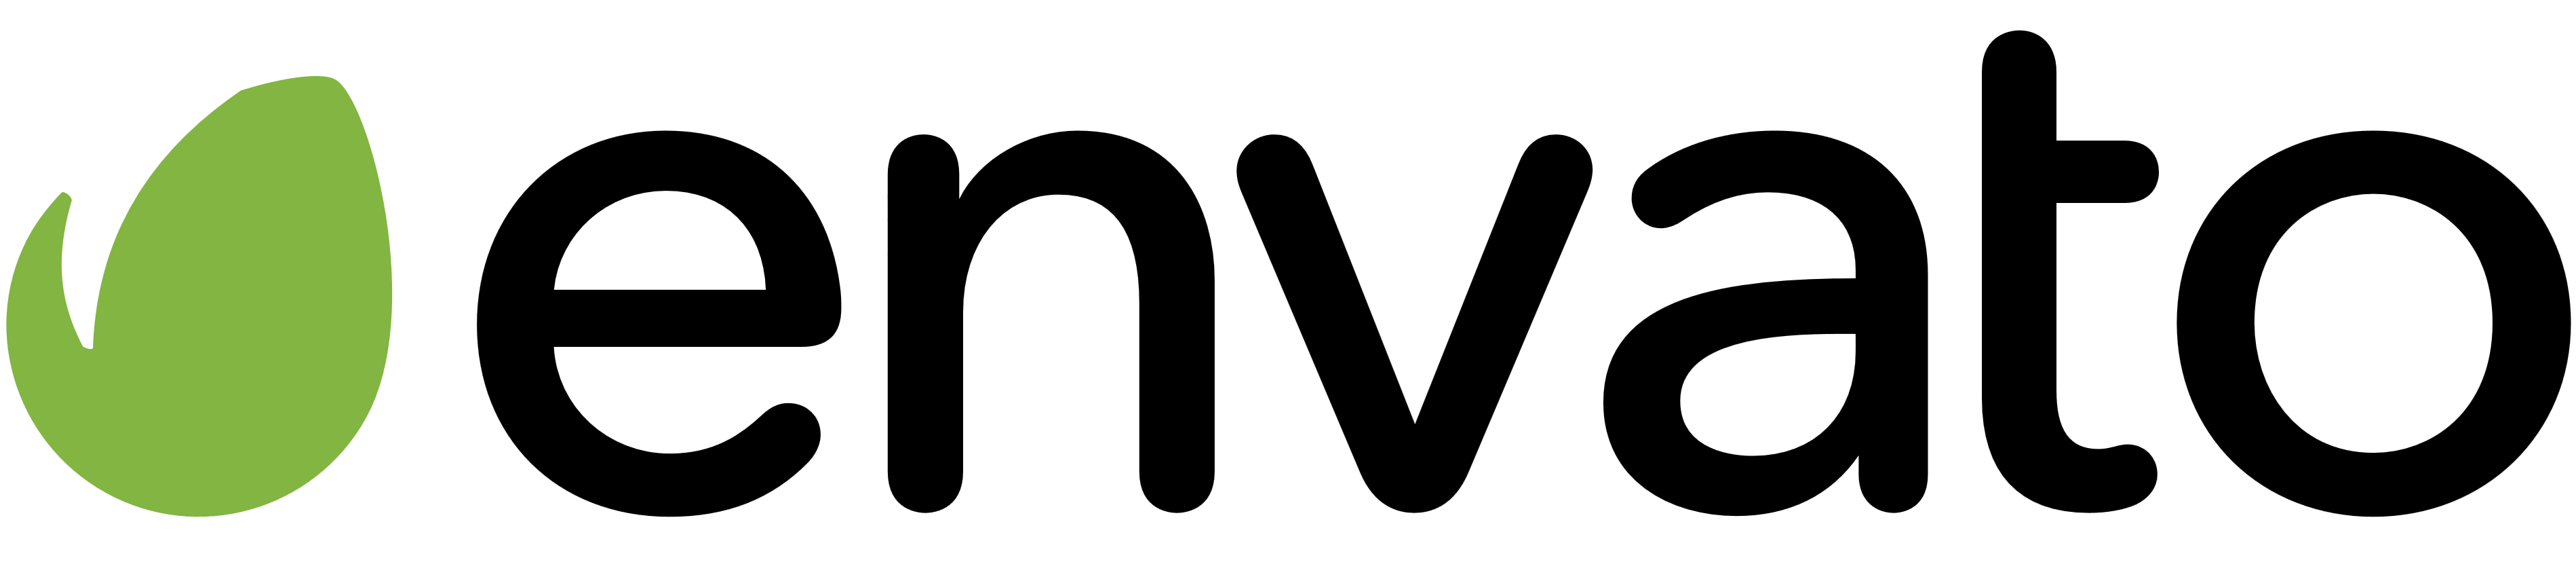 Envato Logo - Envato – Logos, brands and logotypes